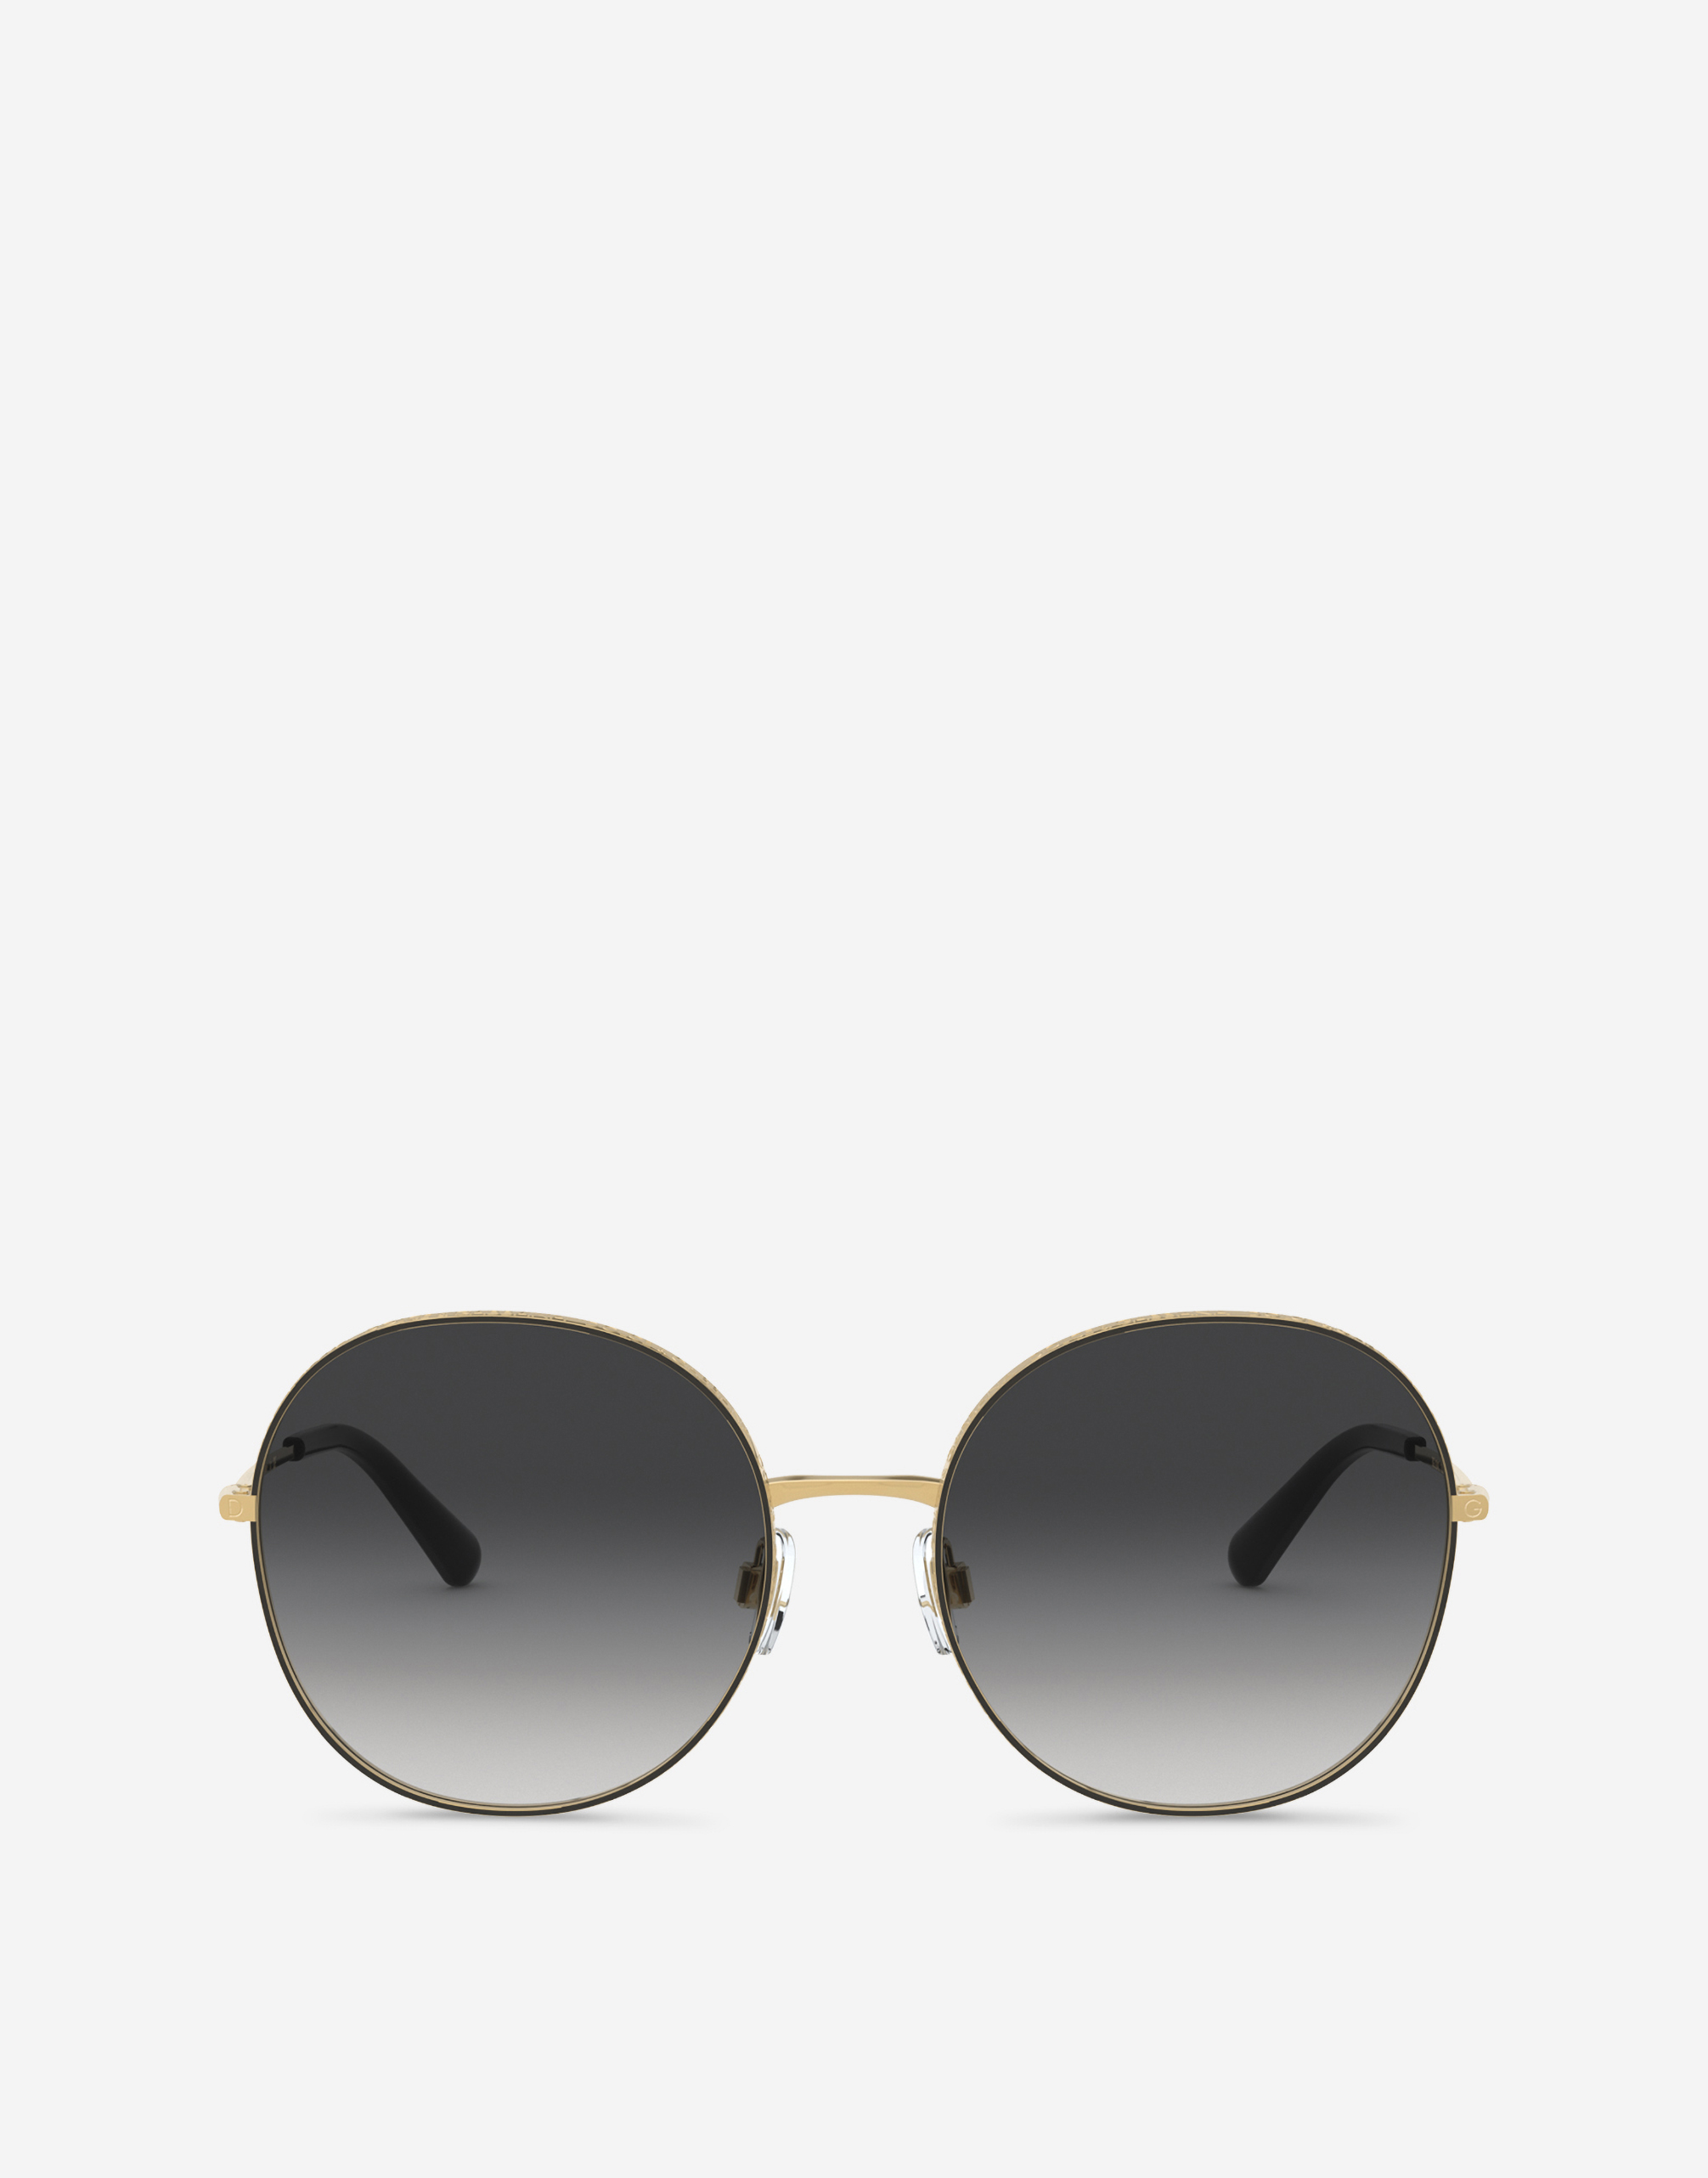 Slim sunglasses in Gold and Black